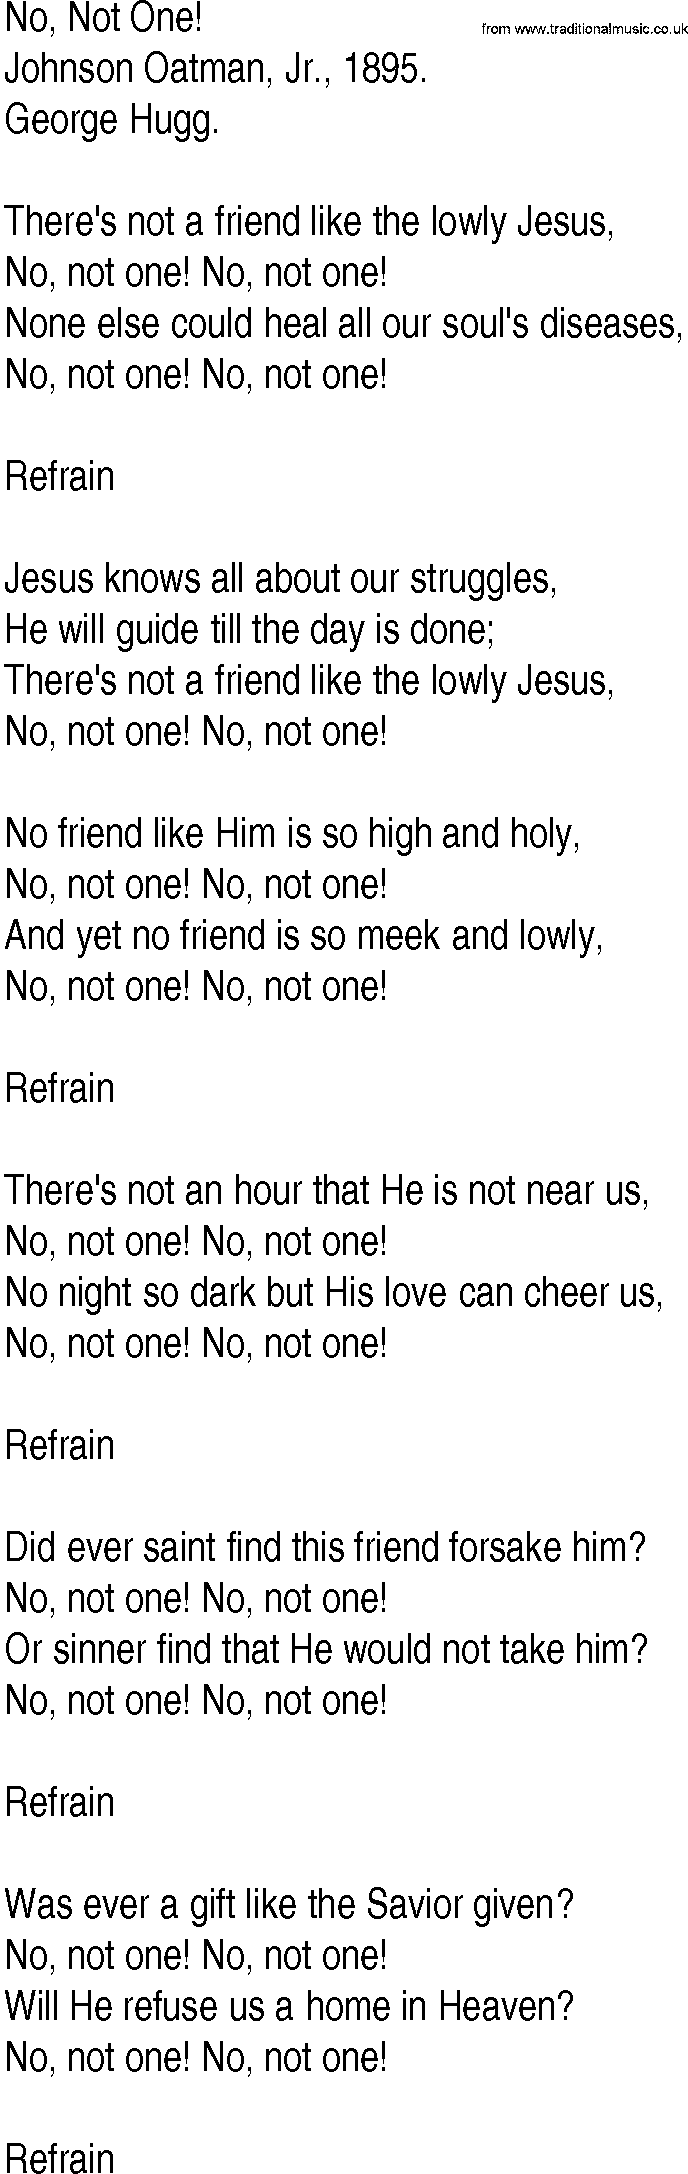 Hymn and Gospel Song: No, Not One! by Johnson Oatman Jr lyrics